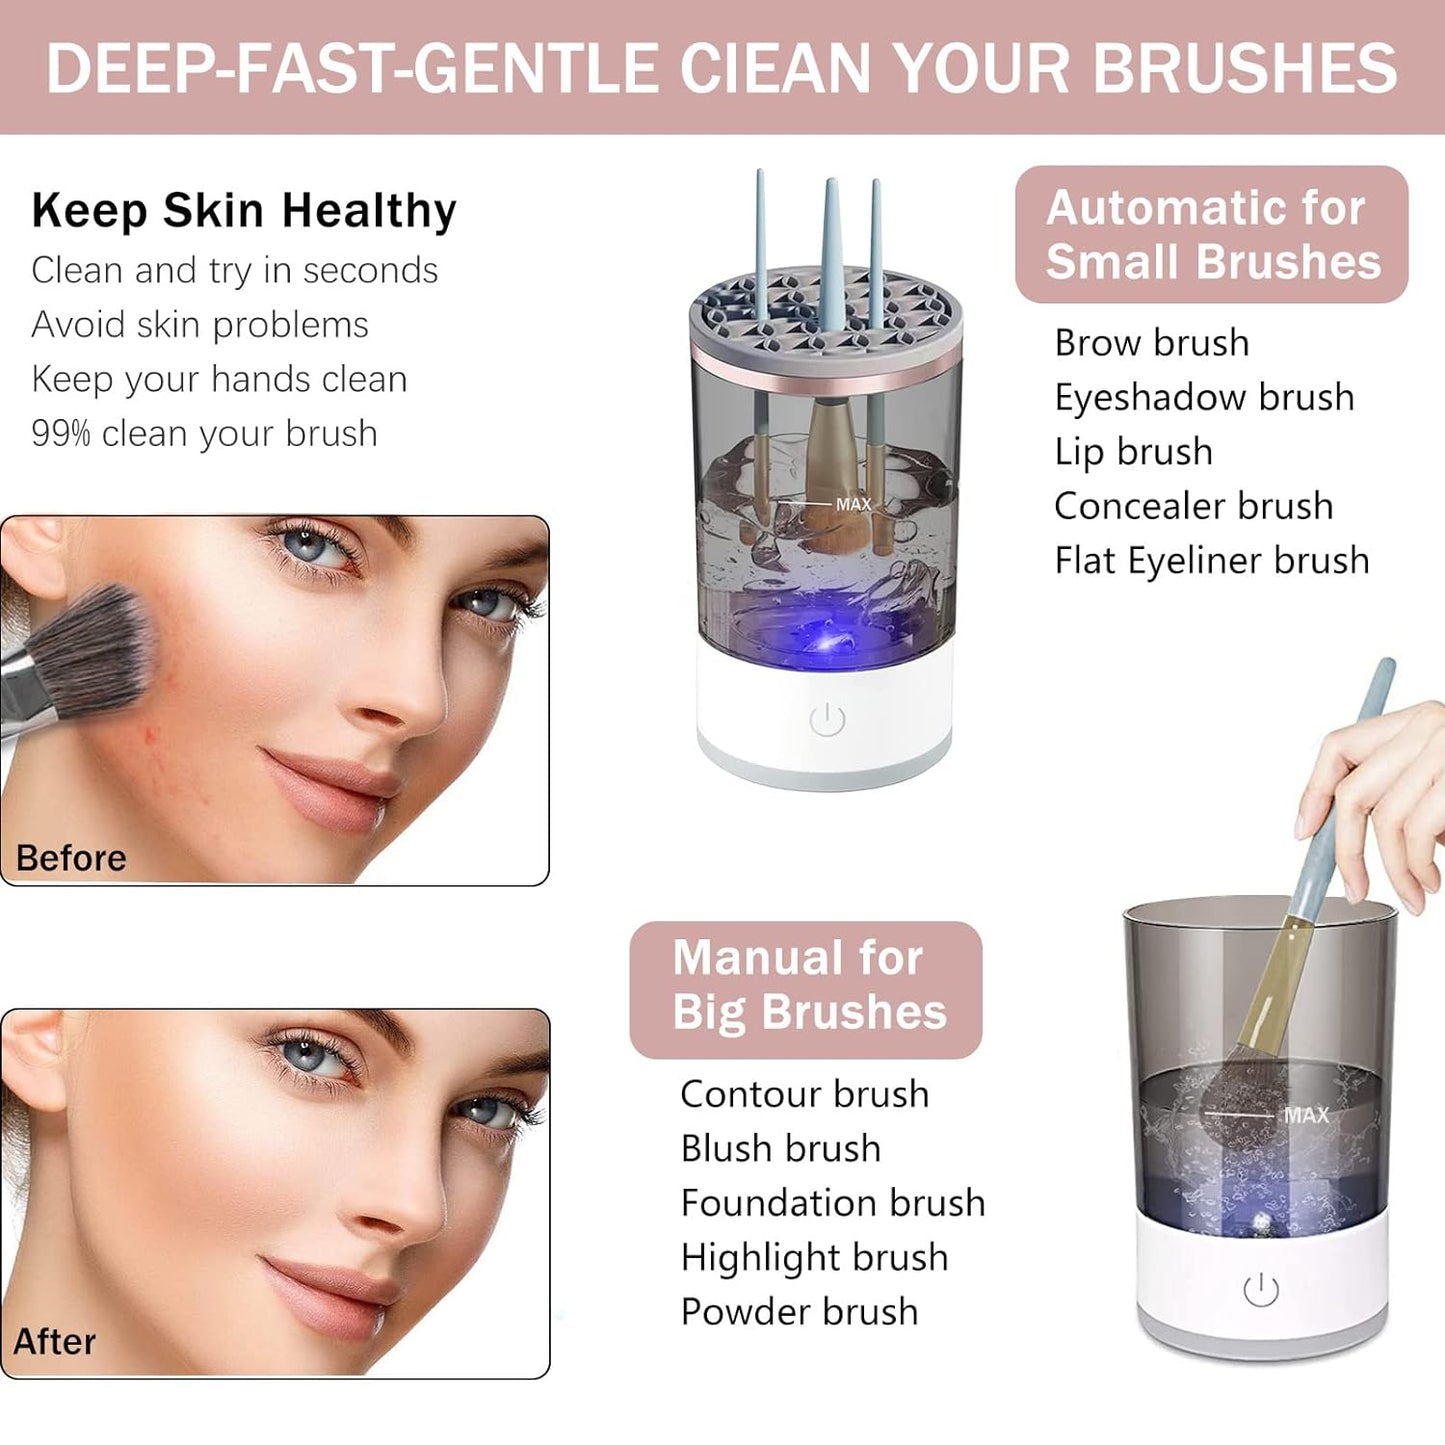 BrushCleanCare™: Magic Electric Makeup Brush Cleaner